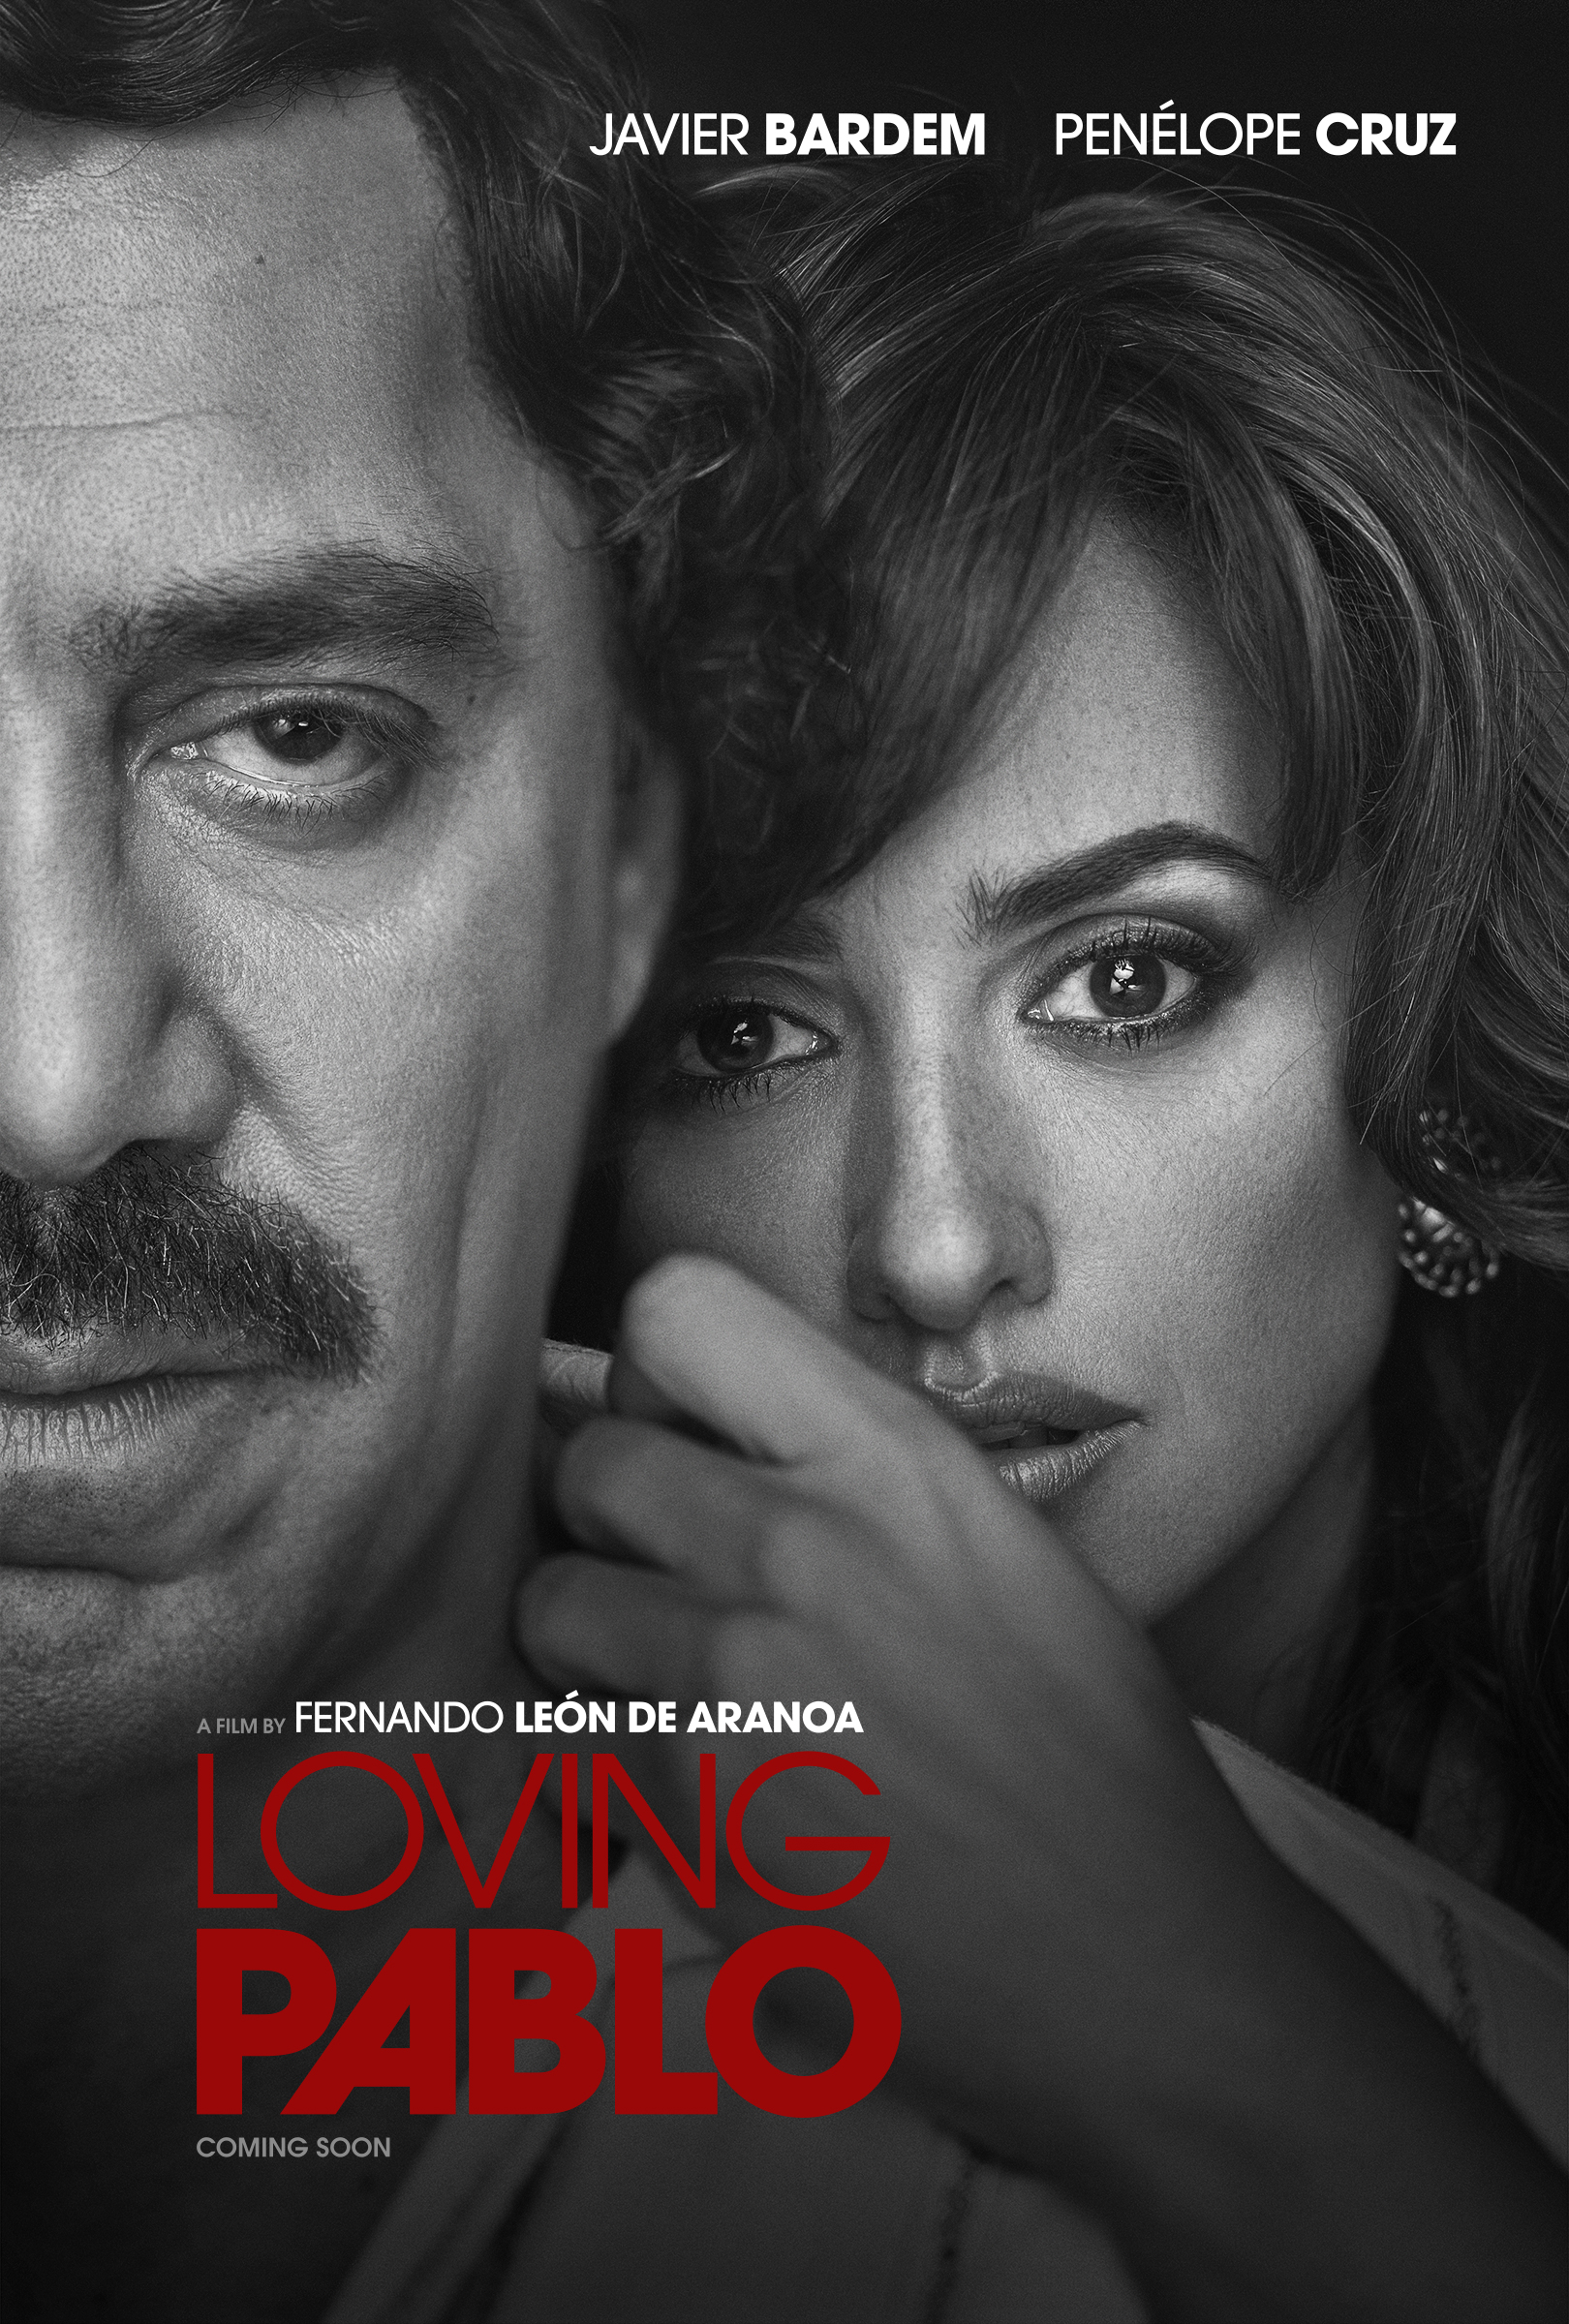 Nonton film Loving Pablo layarkaca21 indoxx1 ganool online streaming terbaru